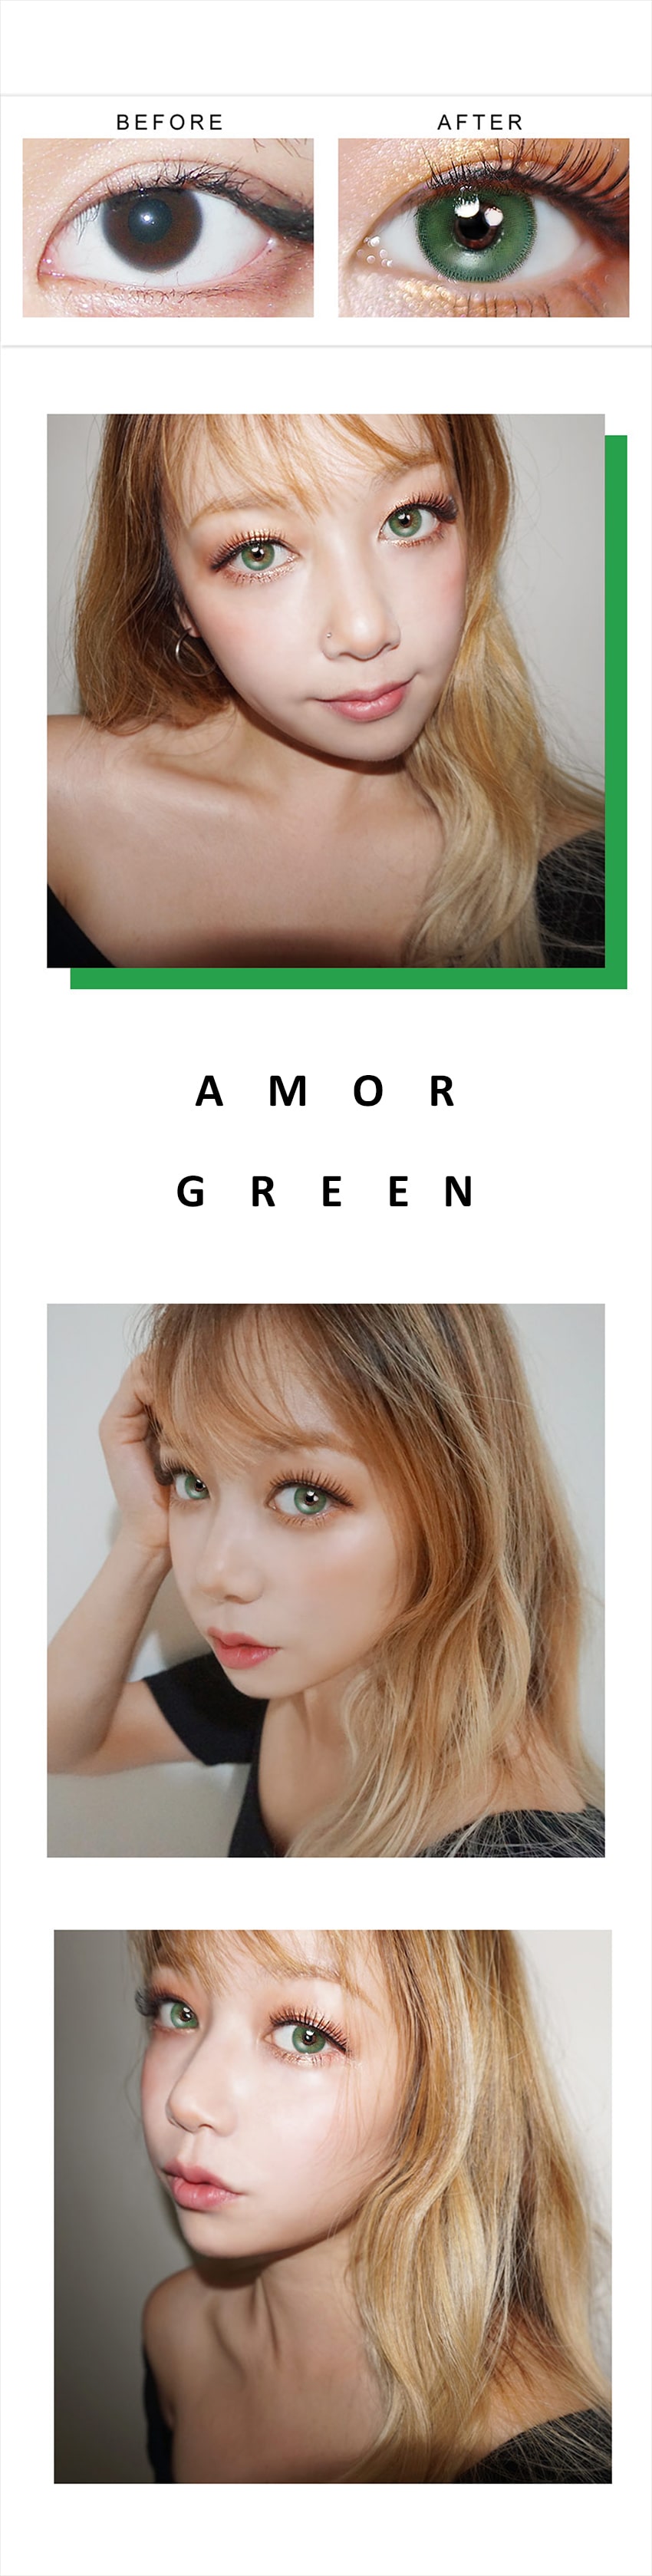 Innovision,inno super amor,Amor,Amor green,韓国カラコン, SNS人気カラコン,Queenslens,ブルー カラコン